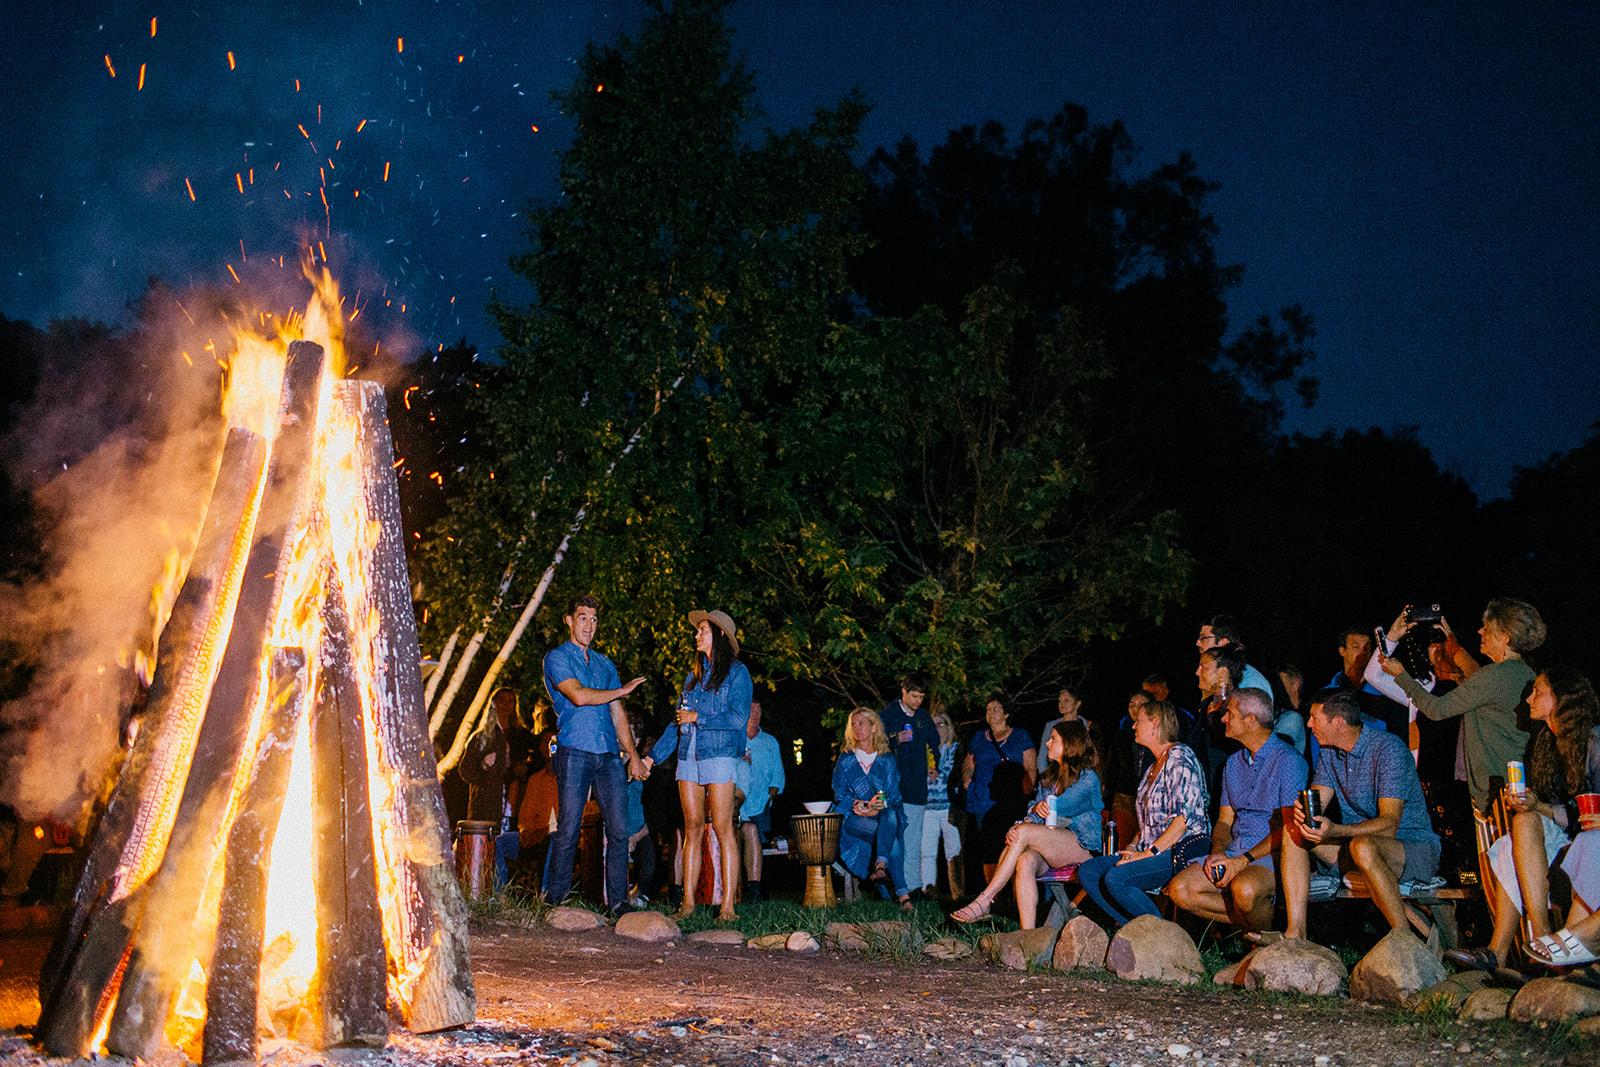 Wedding group gathers around a blazing fire at Camp Wandawega under a moonlit sky